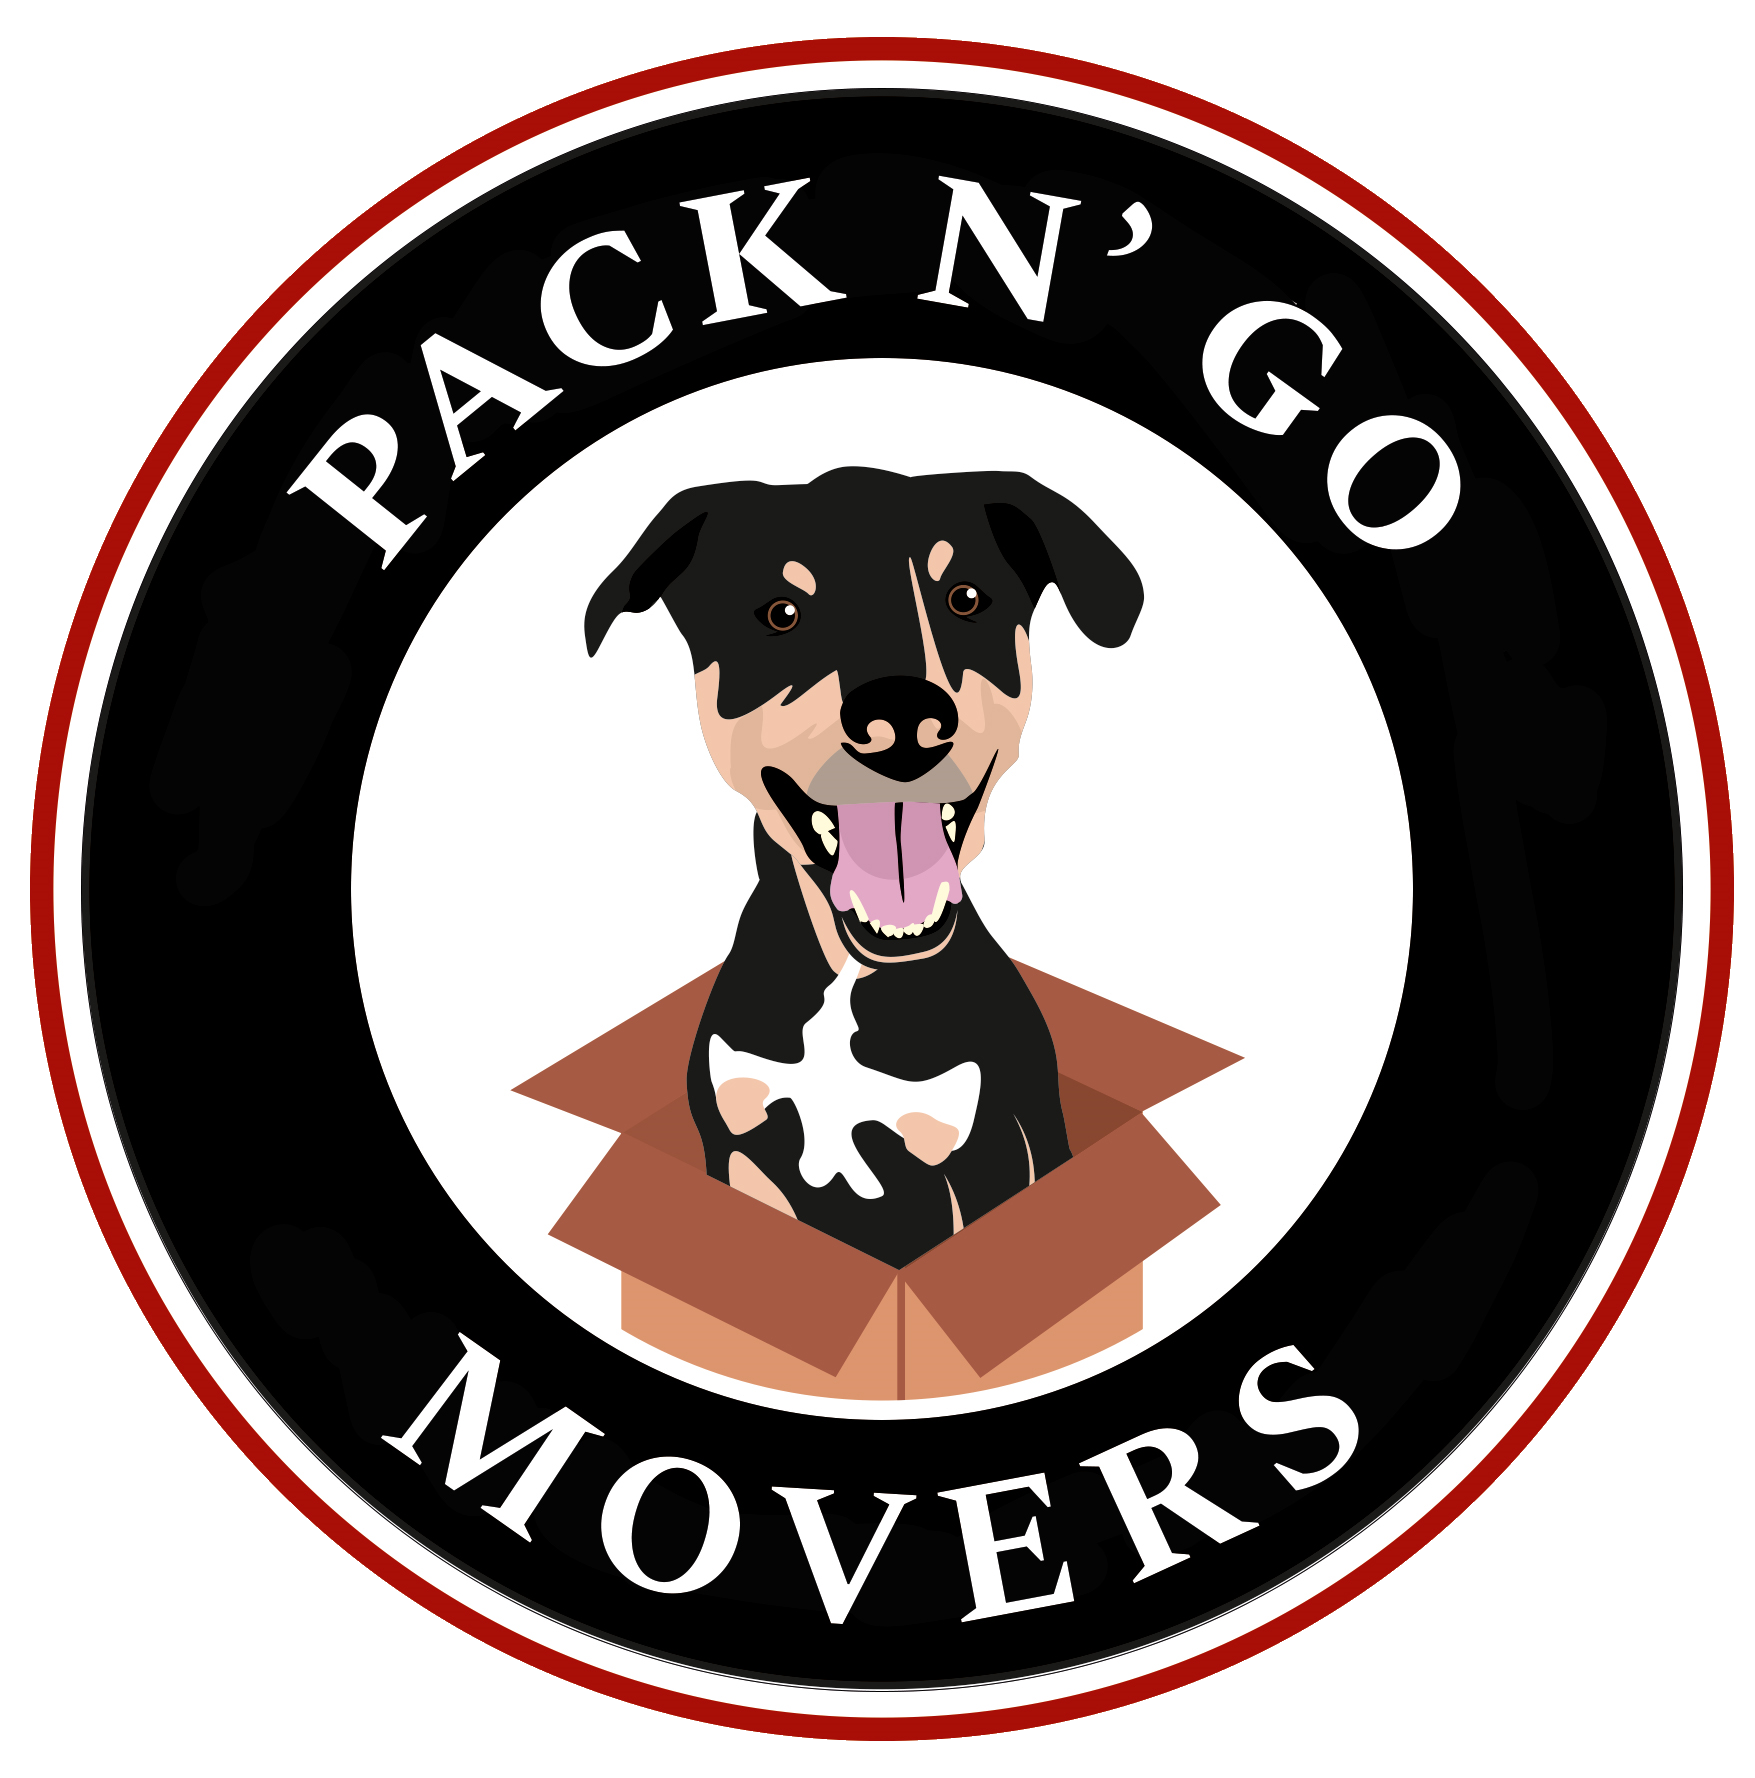 Pack N' Go Movers LLC